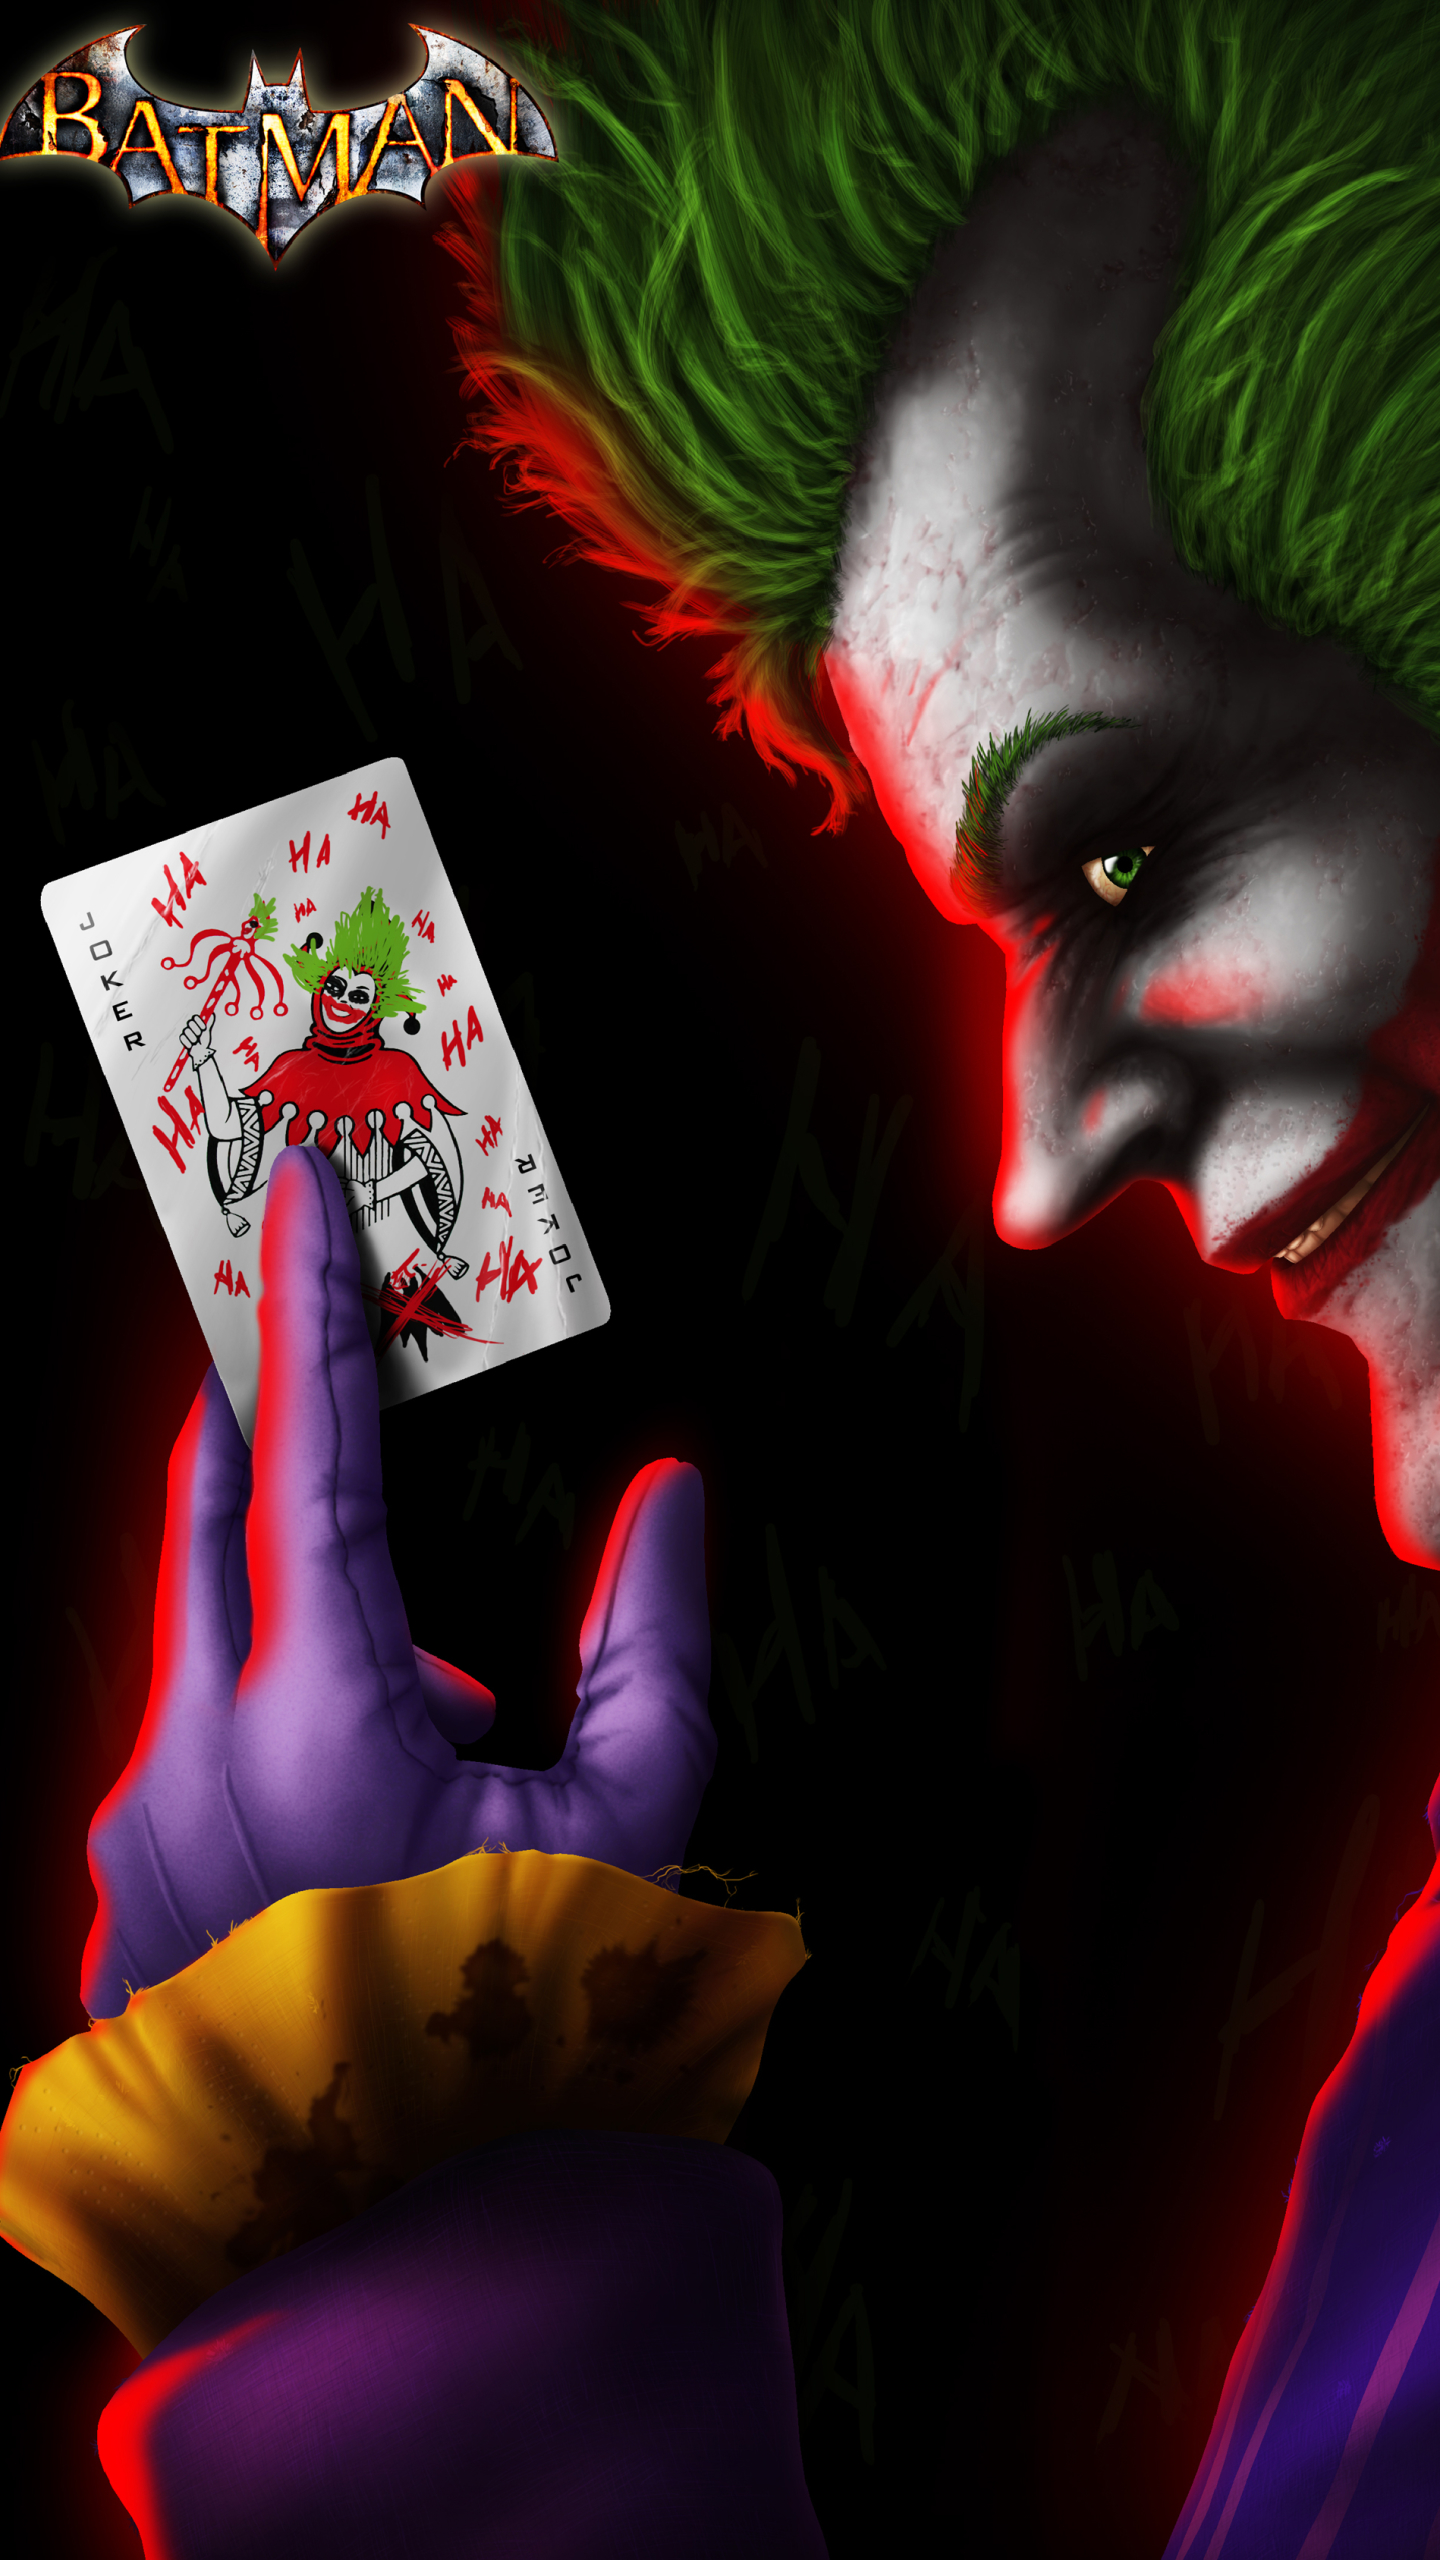 Joker Cards Wallpaper Stock Photo 701325424 | Shutterstock